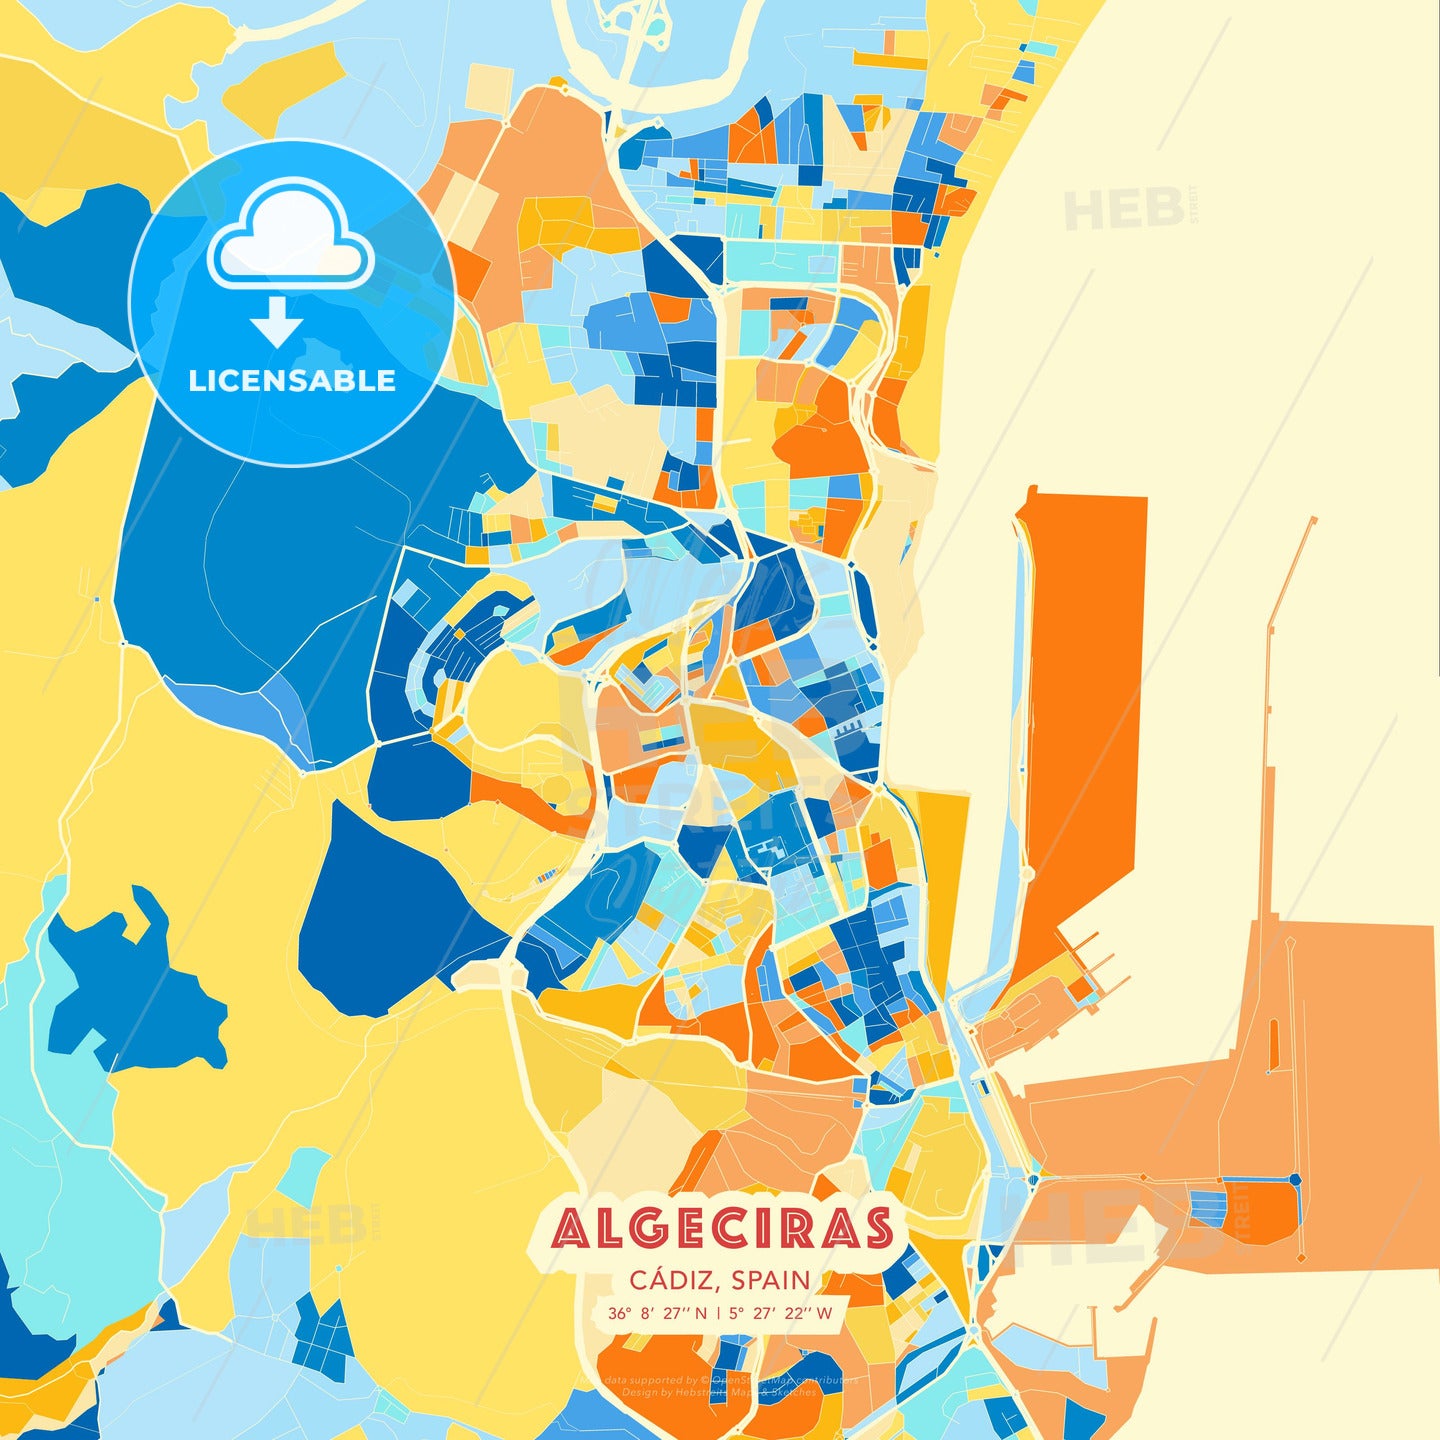 Algeciras, Cádiz, Spain, map - HEBSTREITS Sketches